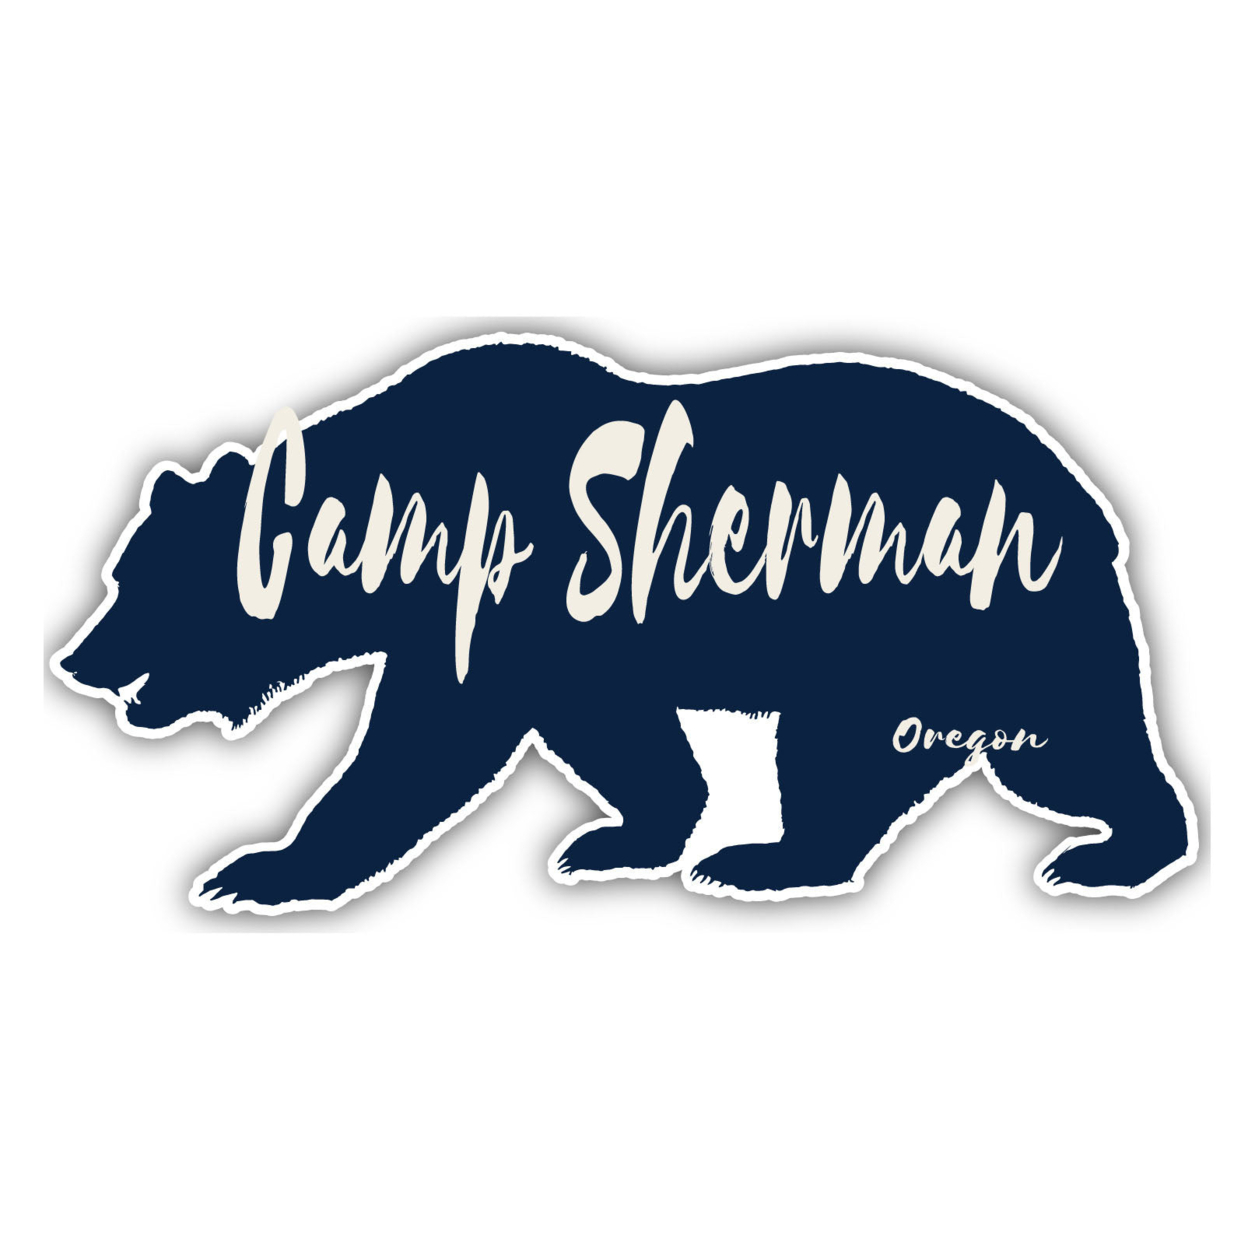 Camp Sherman Oregon Souvenir Decorative Stickers (Choose Theme And Size) - Single Unit, 10-Inch, Bear